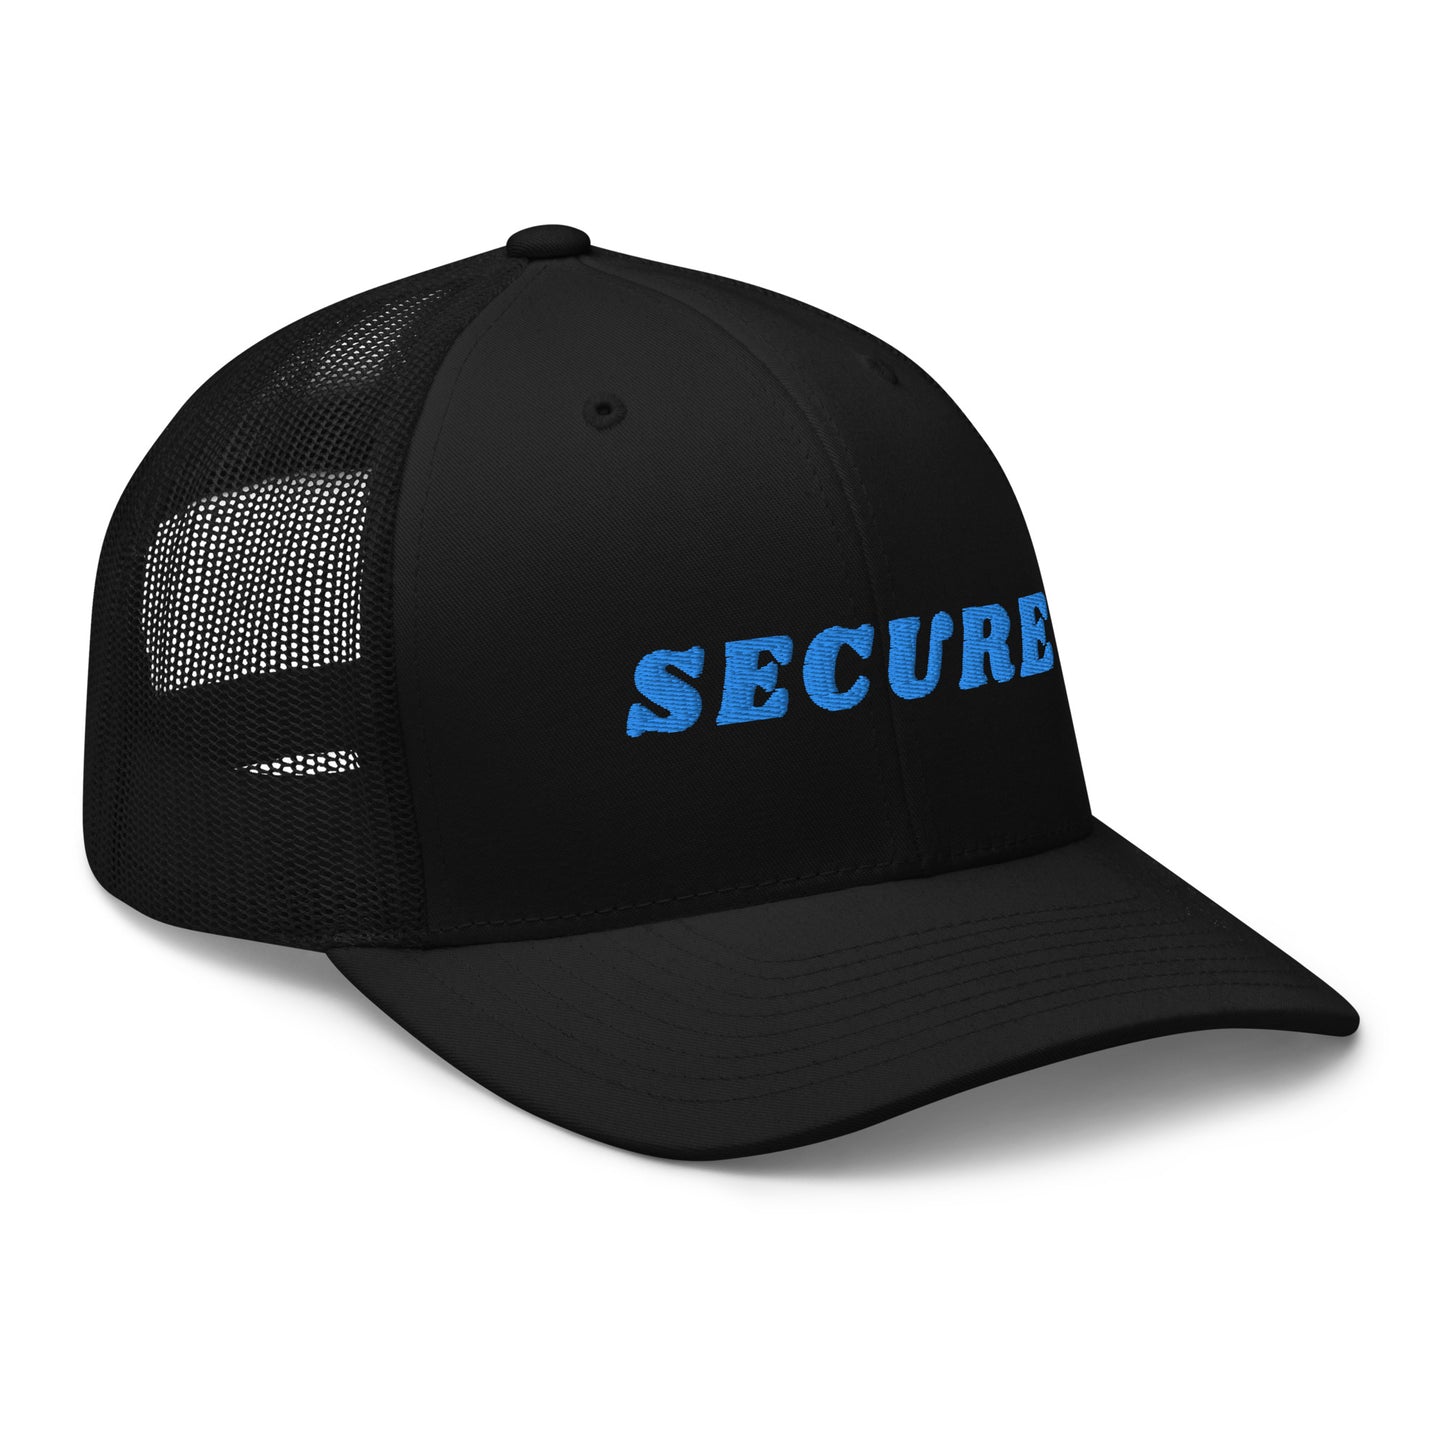 "Secure" Trucker Cap